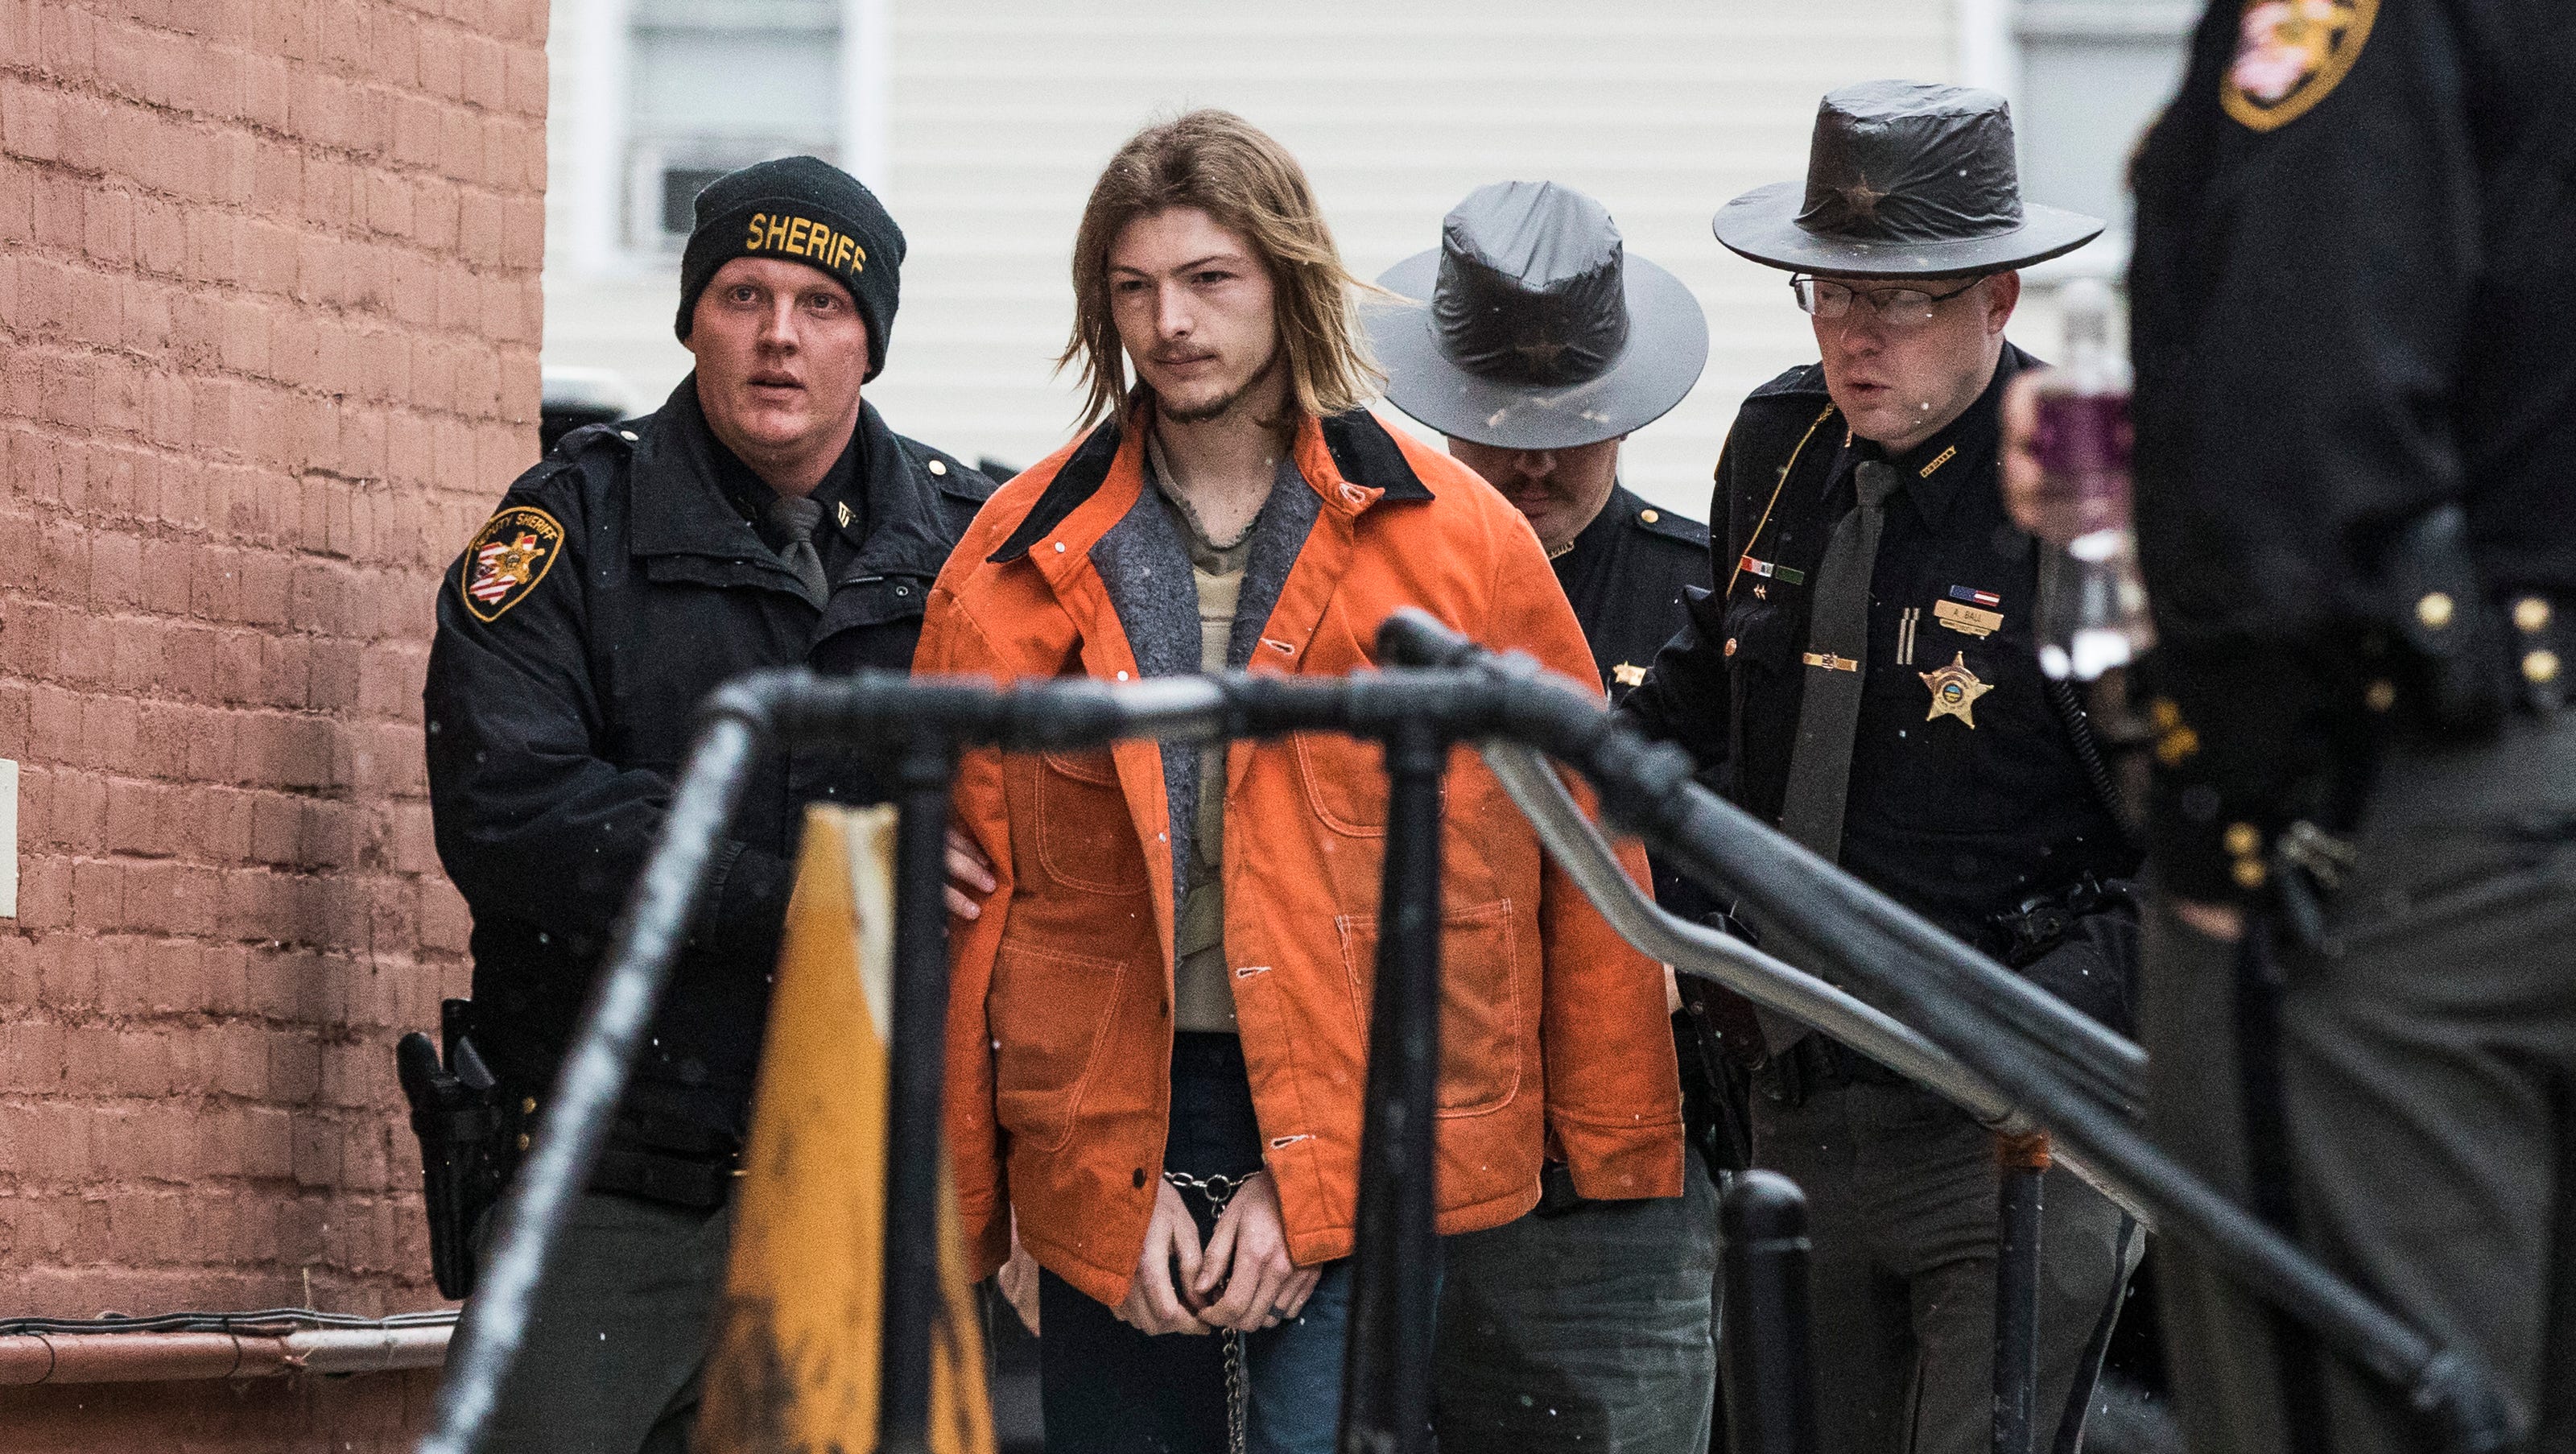 Rhoden massacre: Edward #39 Jake #39 Wagner pleads not guilty to 23 counts